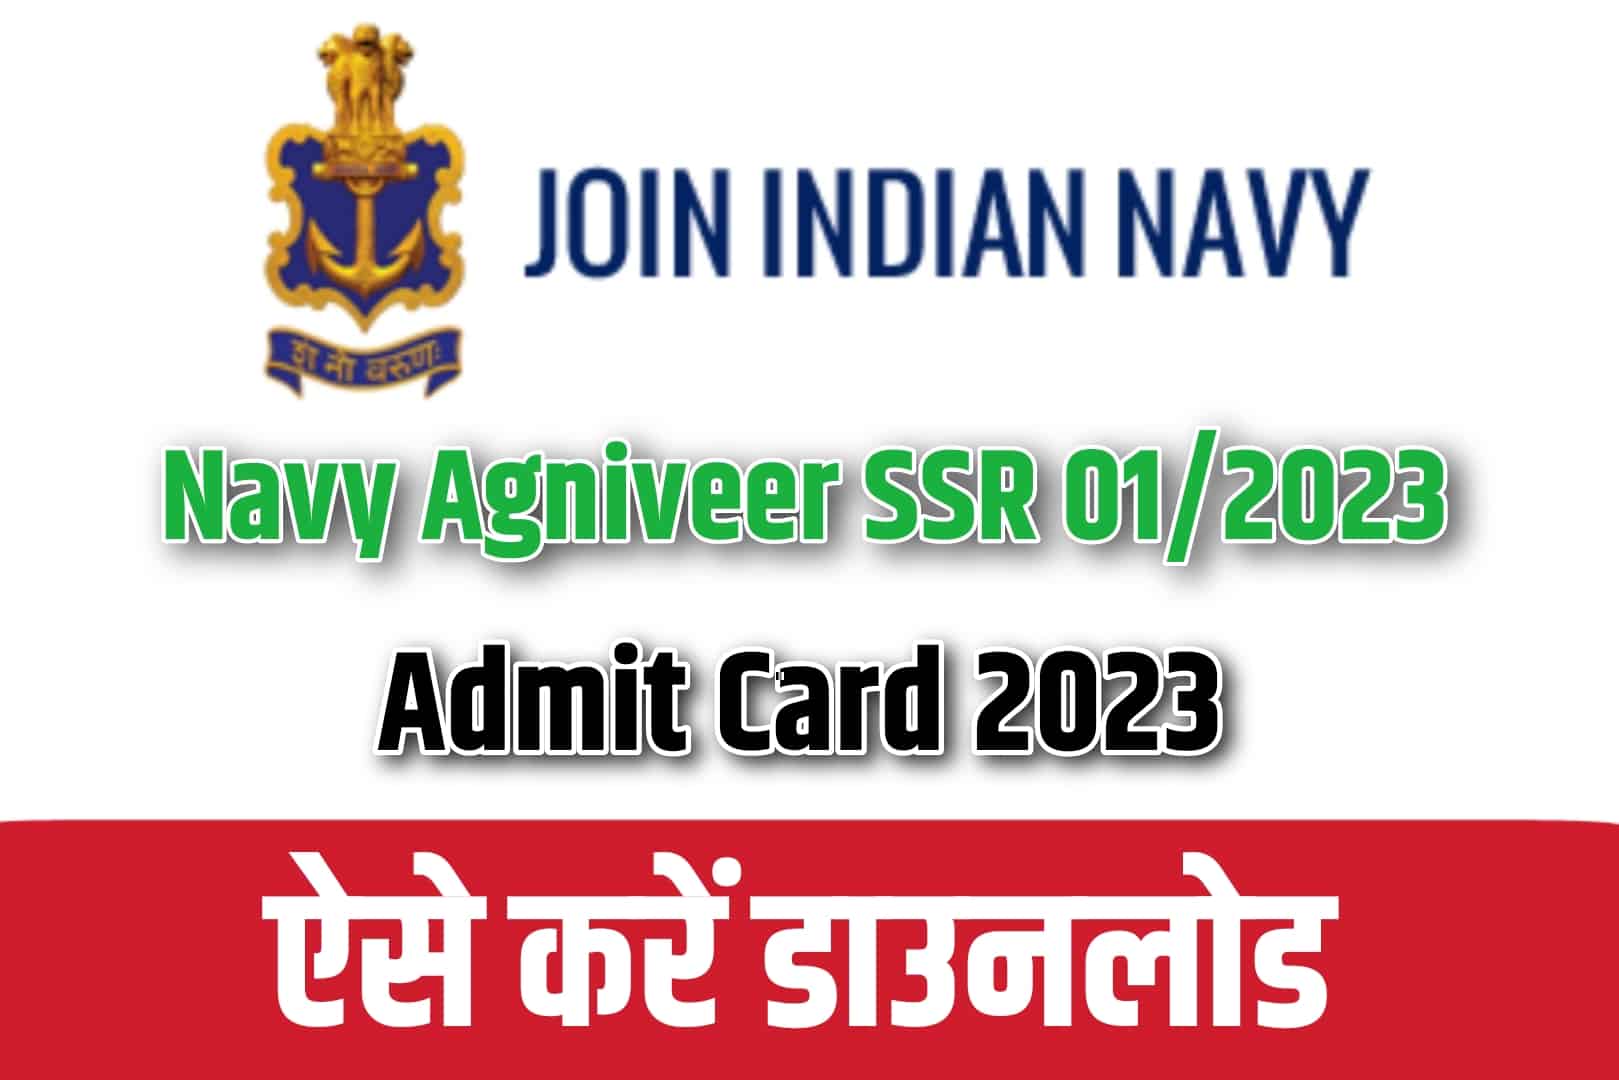 Navy Agniveer SSR 01/2023 Admit Card 2023 | नौसेना एसएसआर अग्निवीर एडमिट कार्ड